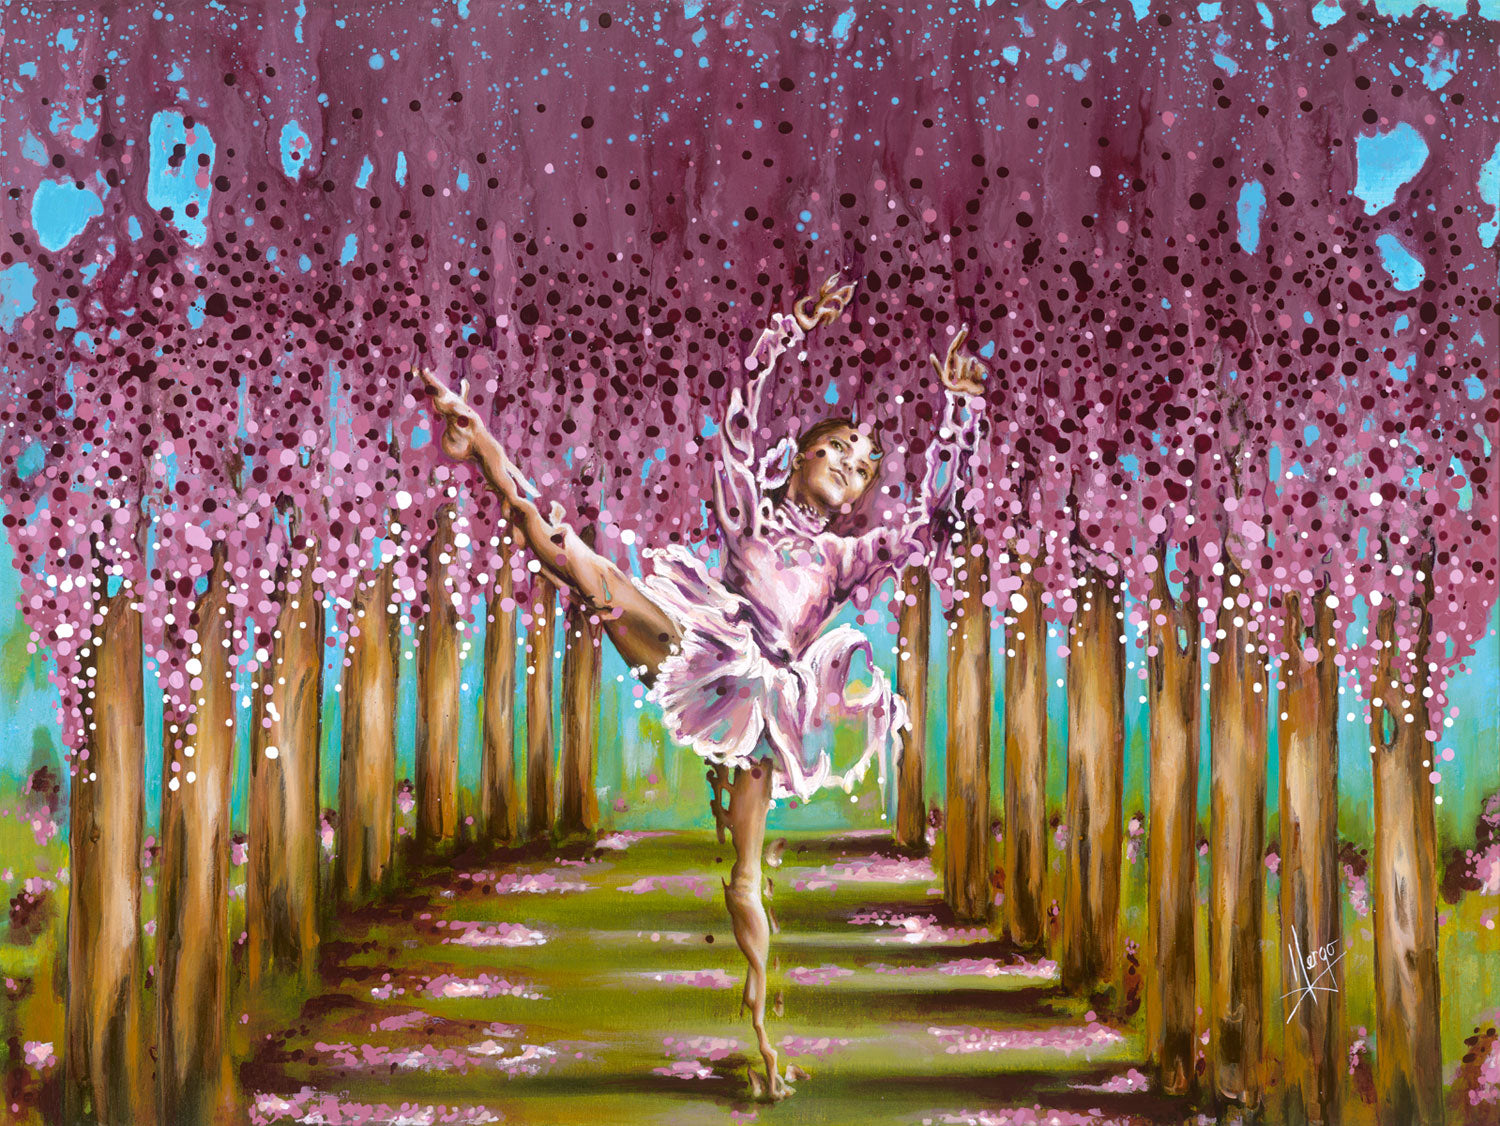 Dancing Blossom